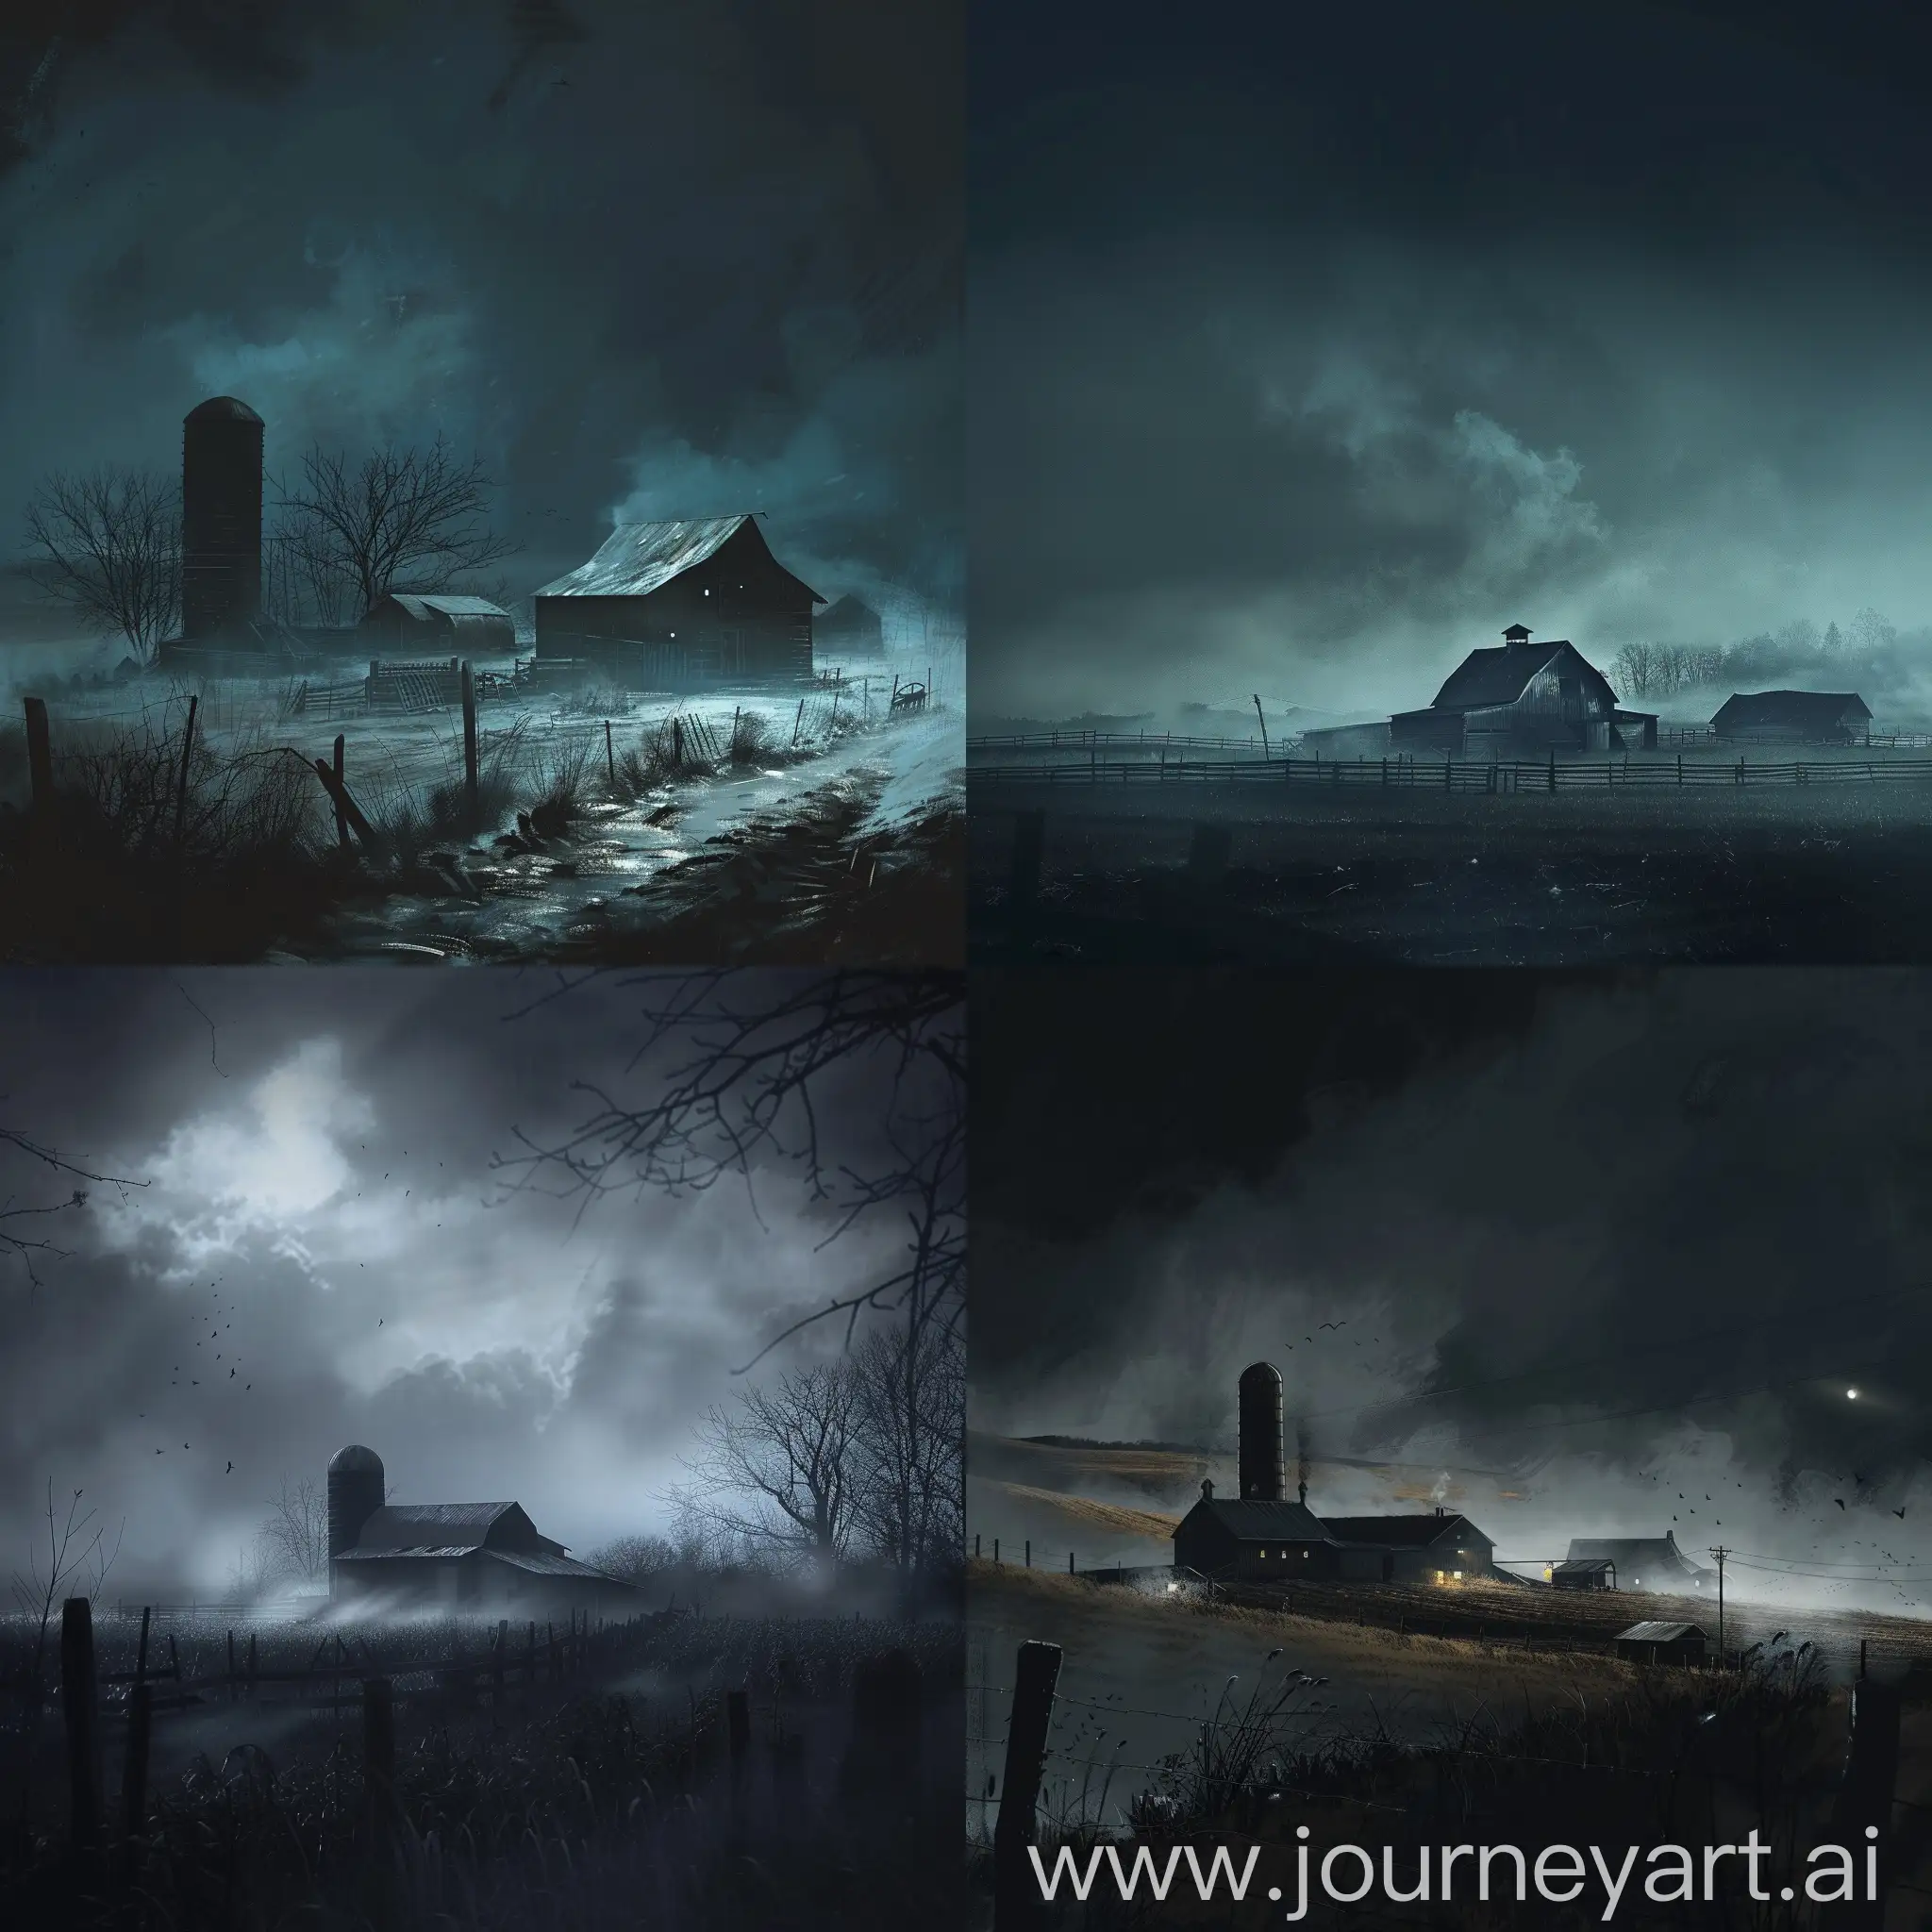 a dark, foreboding scene of a farm shrouded in mist
